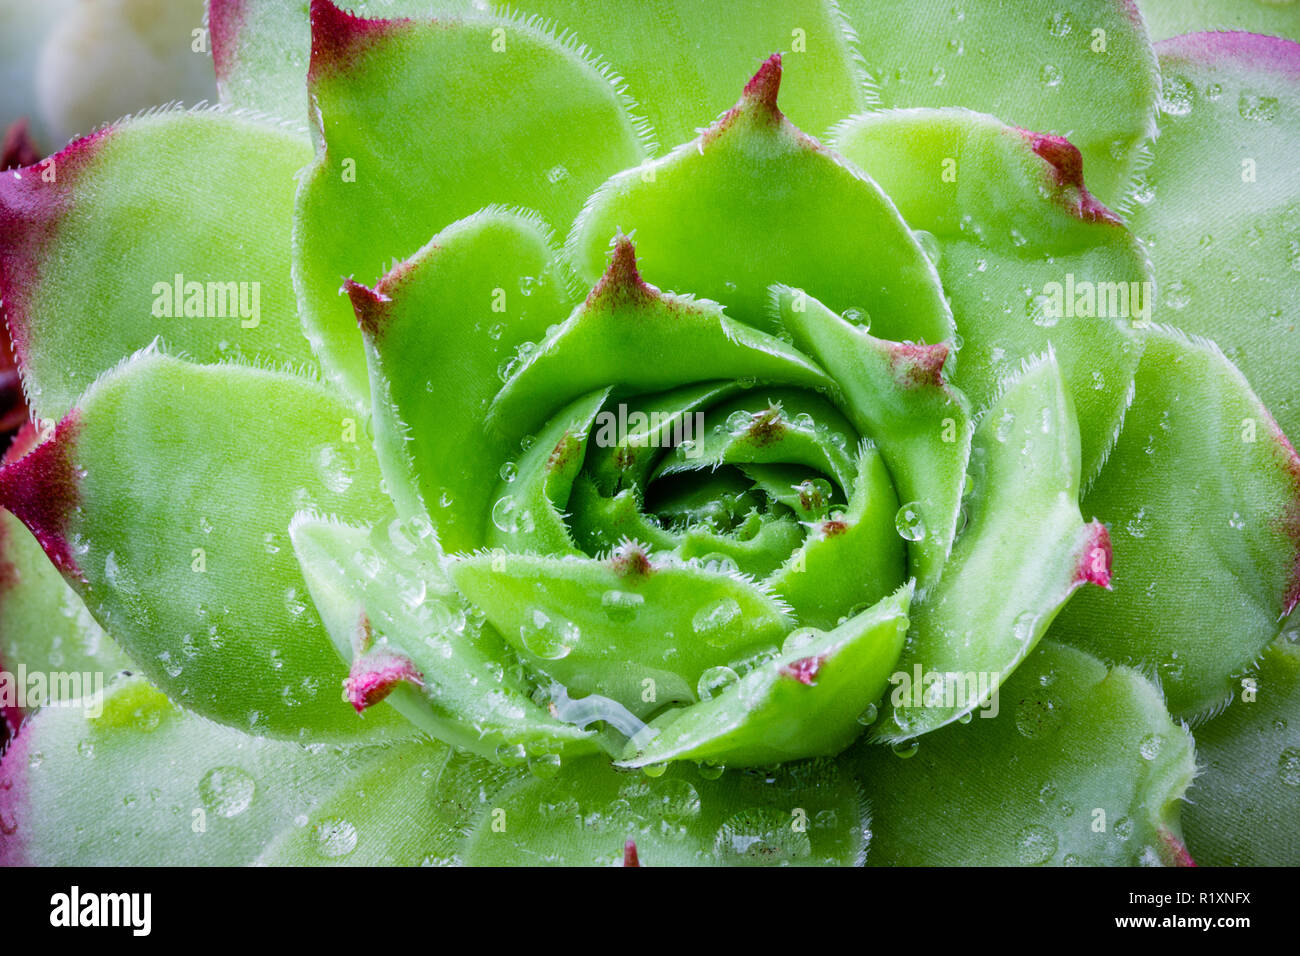 Sempervivum tectorum Royanum, green and red Houseleek succulent plant rosette with rain drops closeup drought tolerant plant Stock Photo